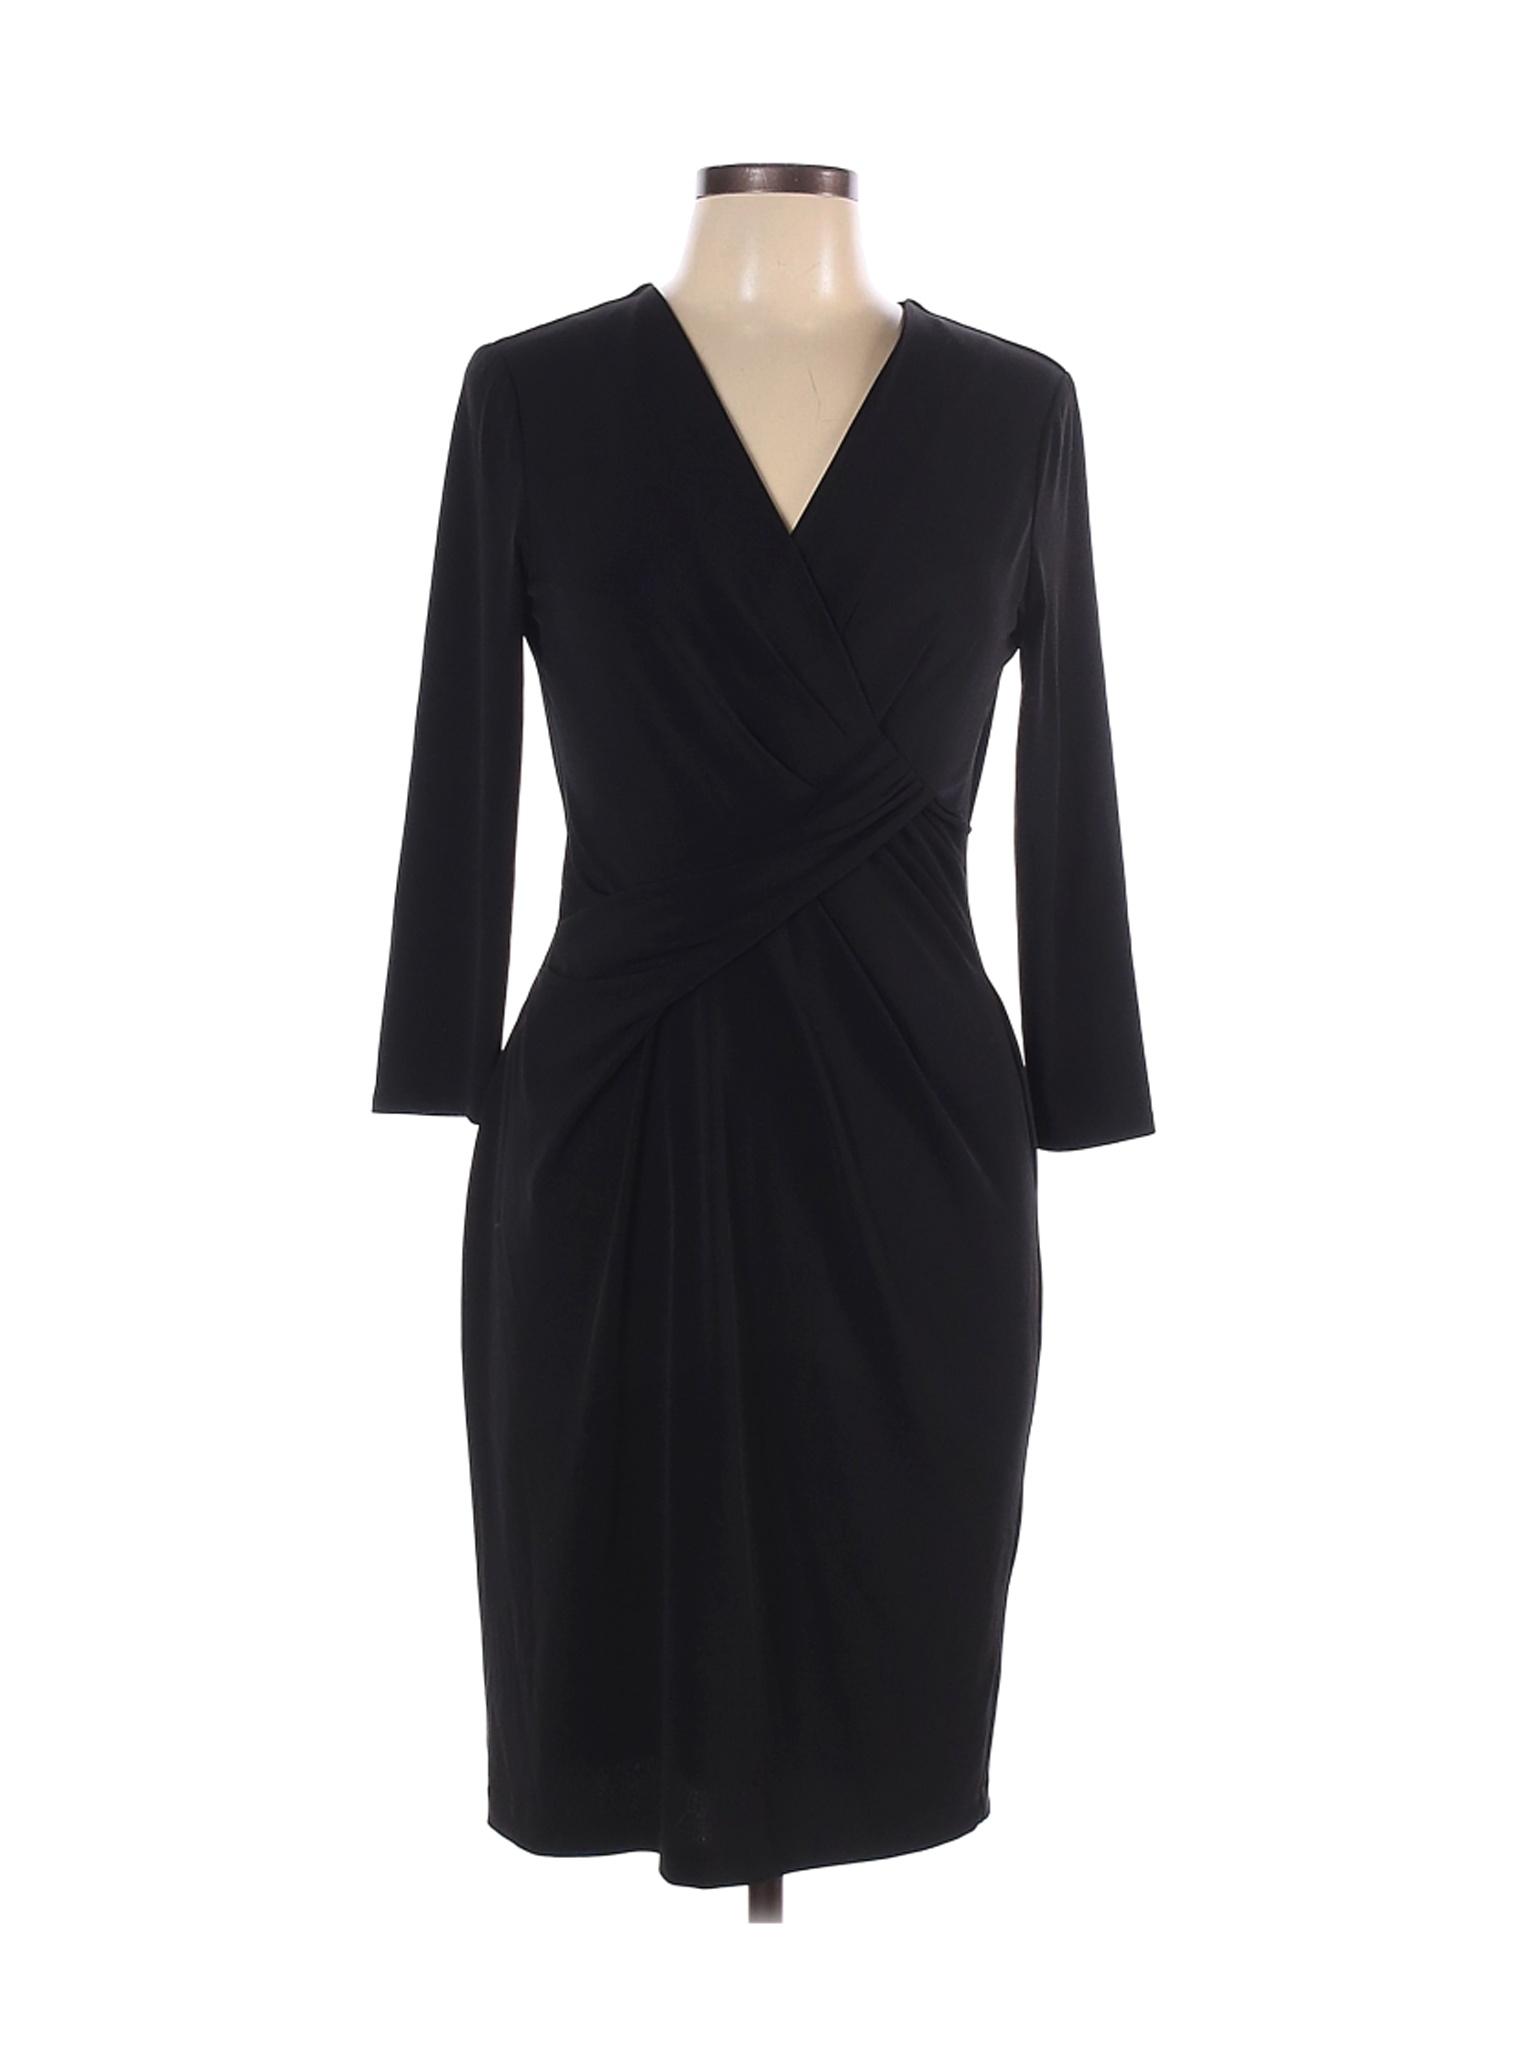 Karl Lagerfeld Paris Women Black Cocktail Dress 10 | eBay